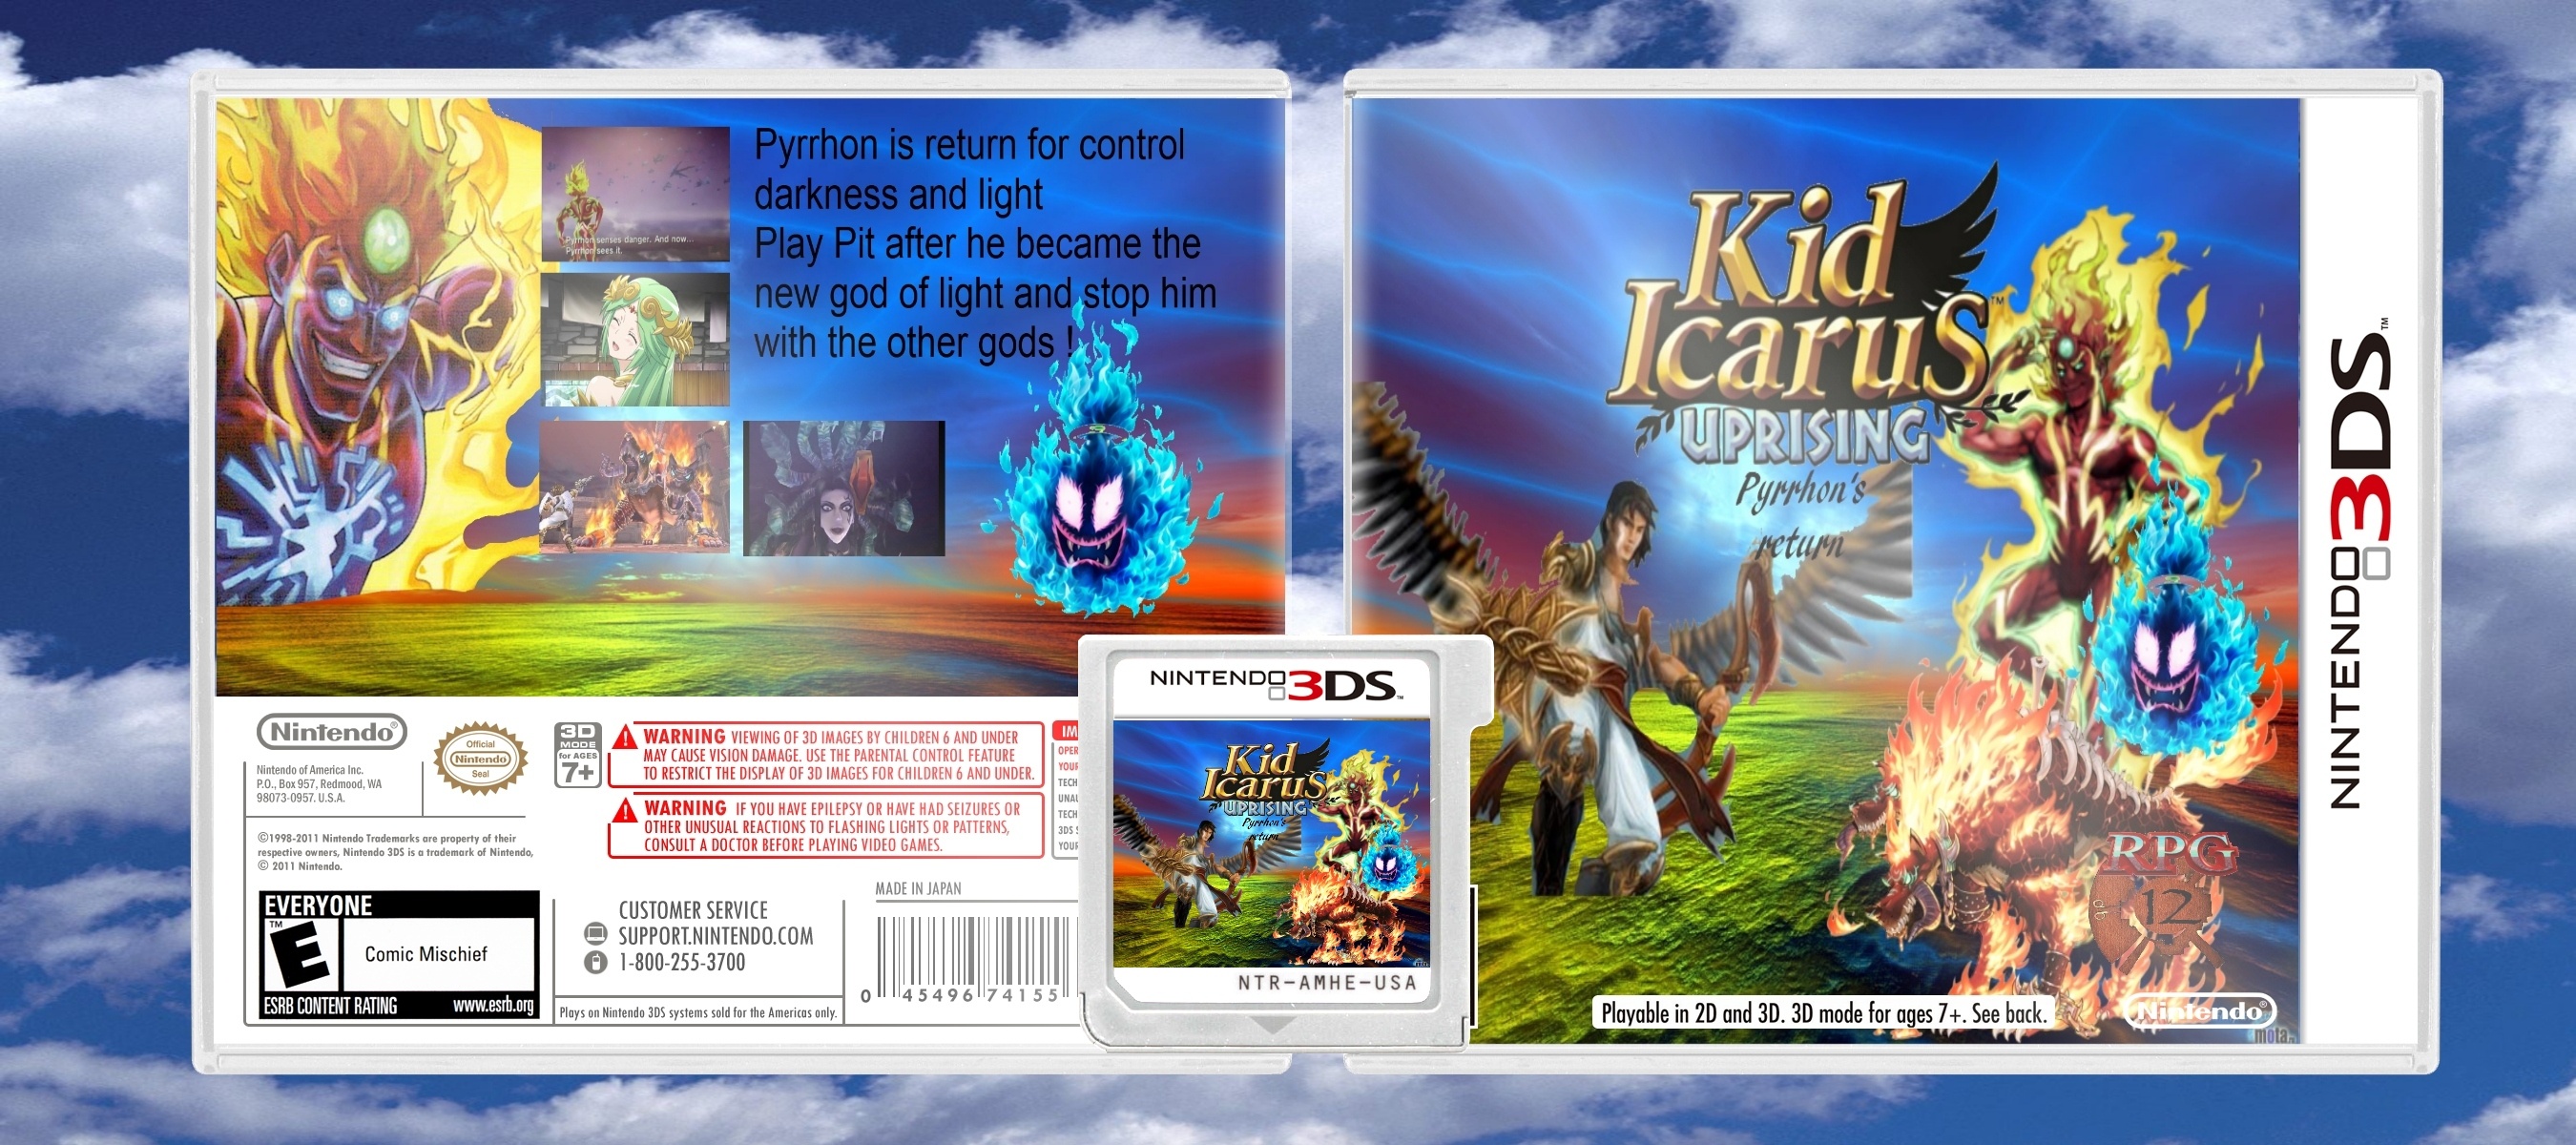 Kid Icarus: the Pyrrhon's return box cover